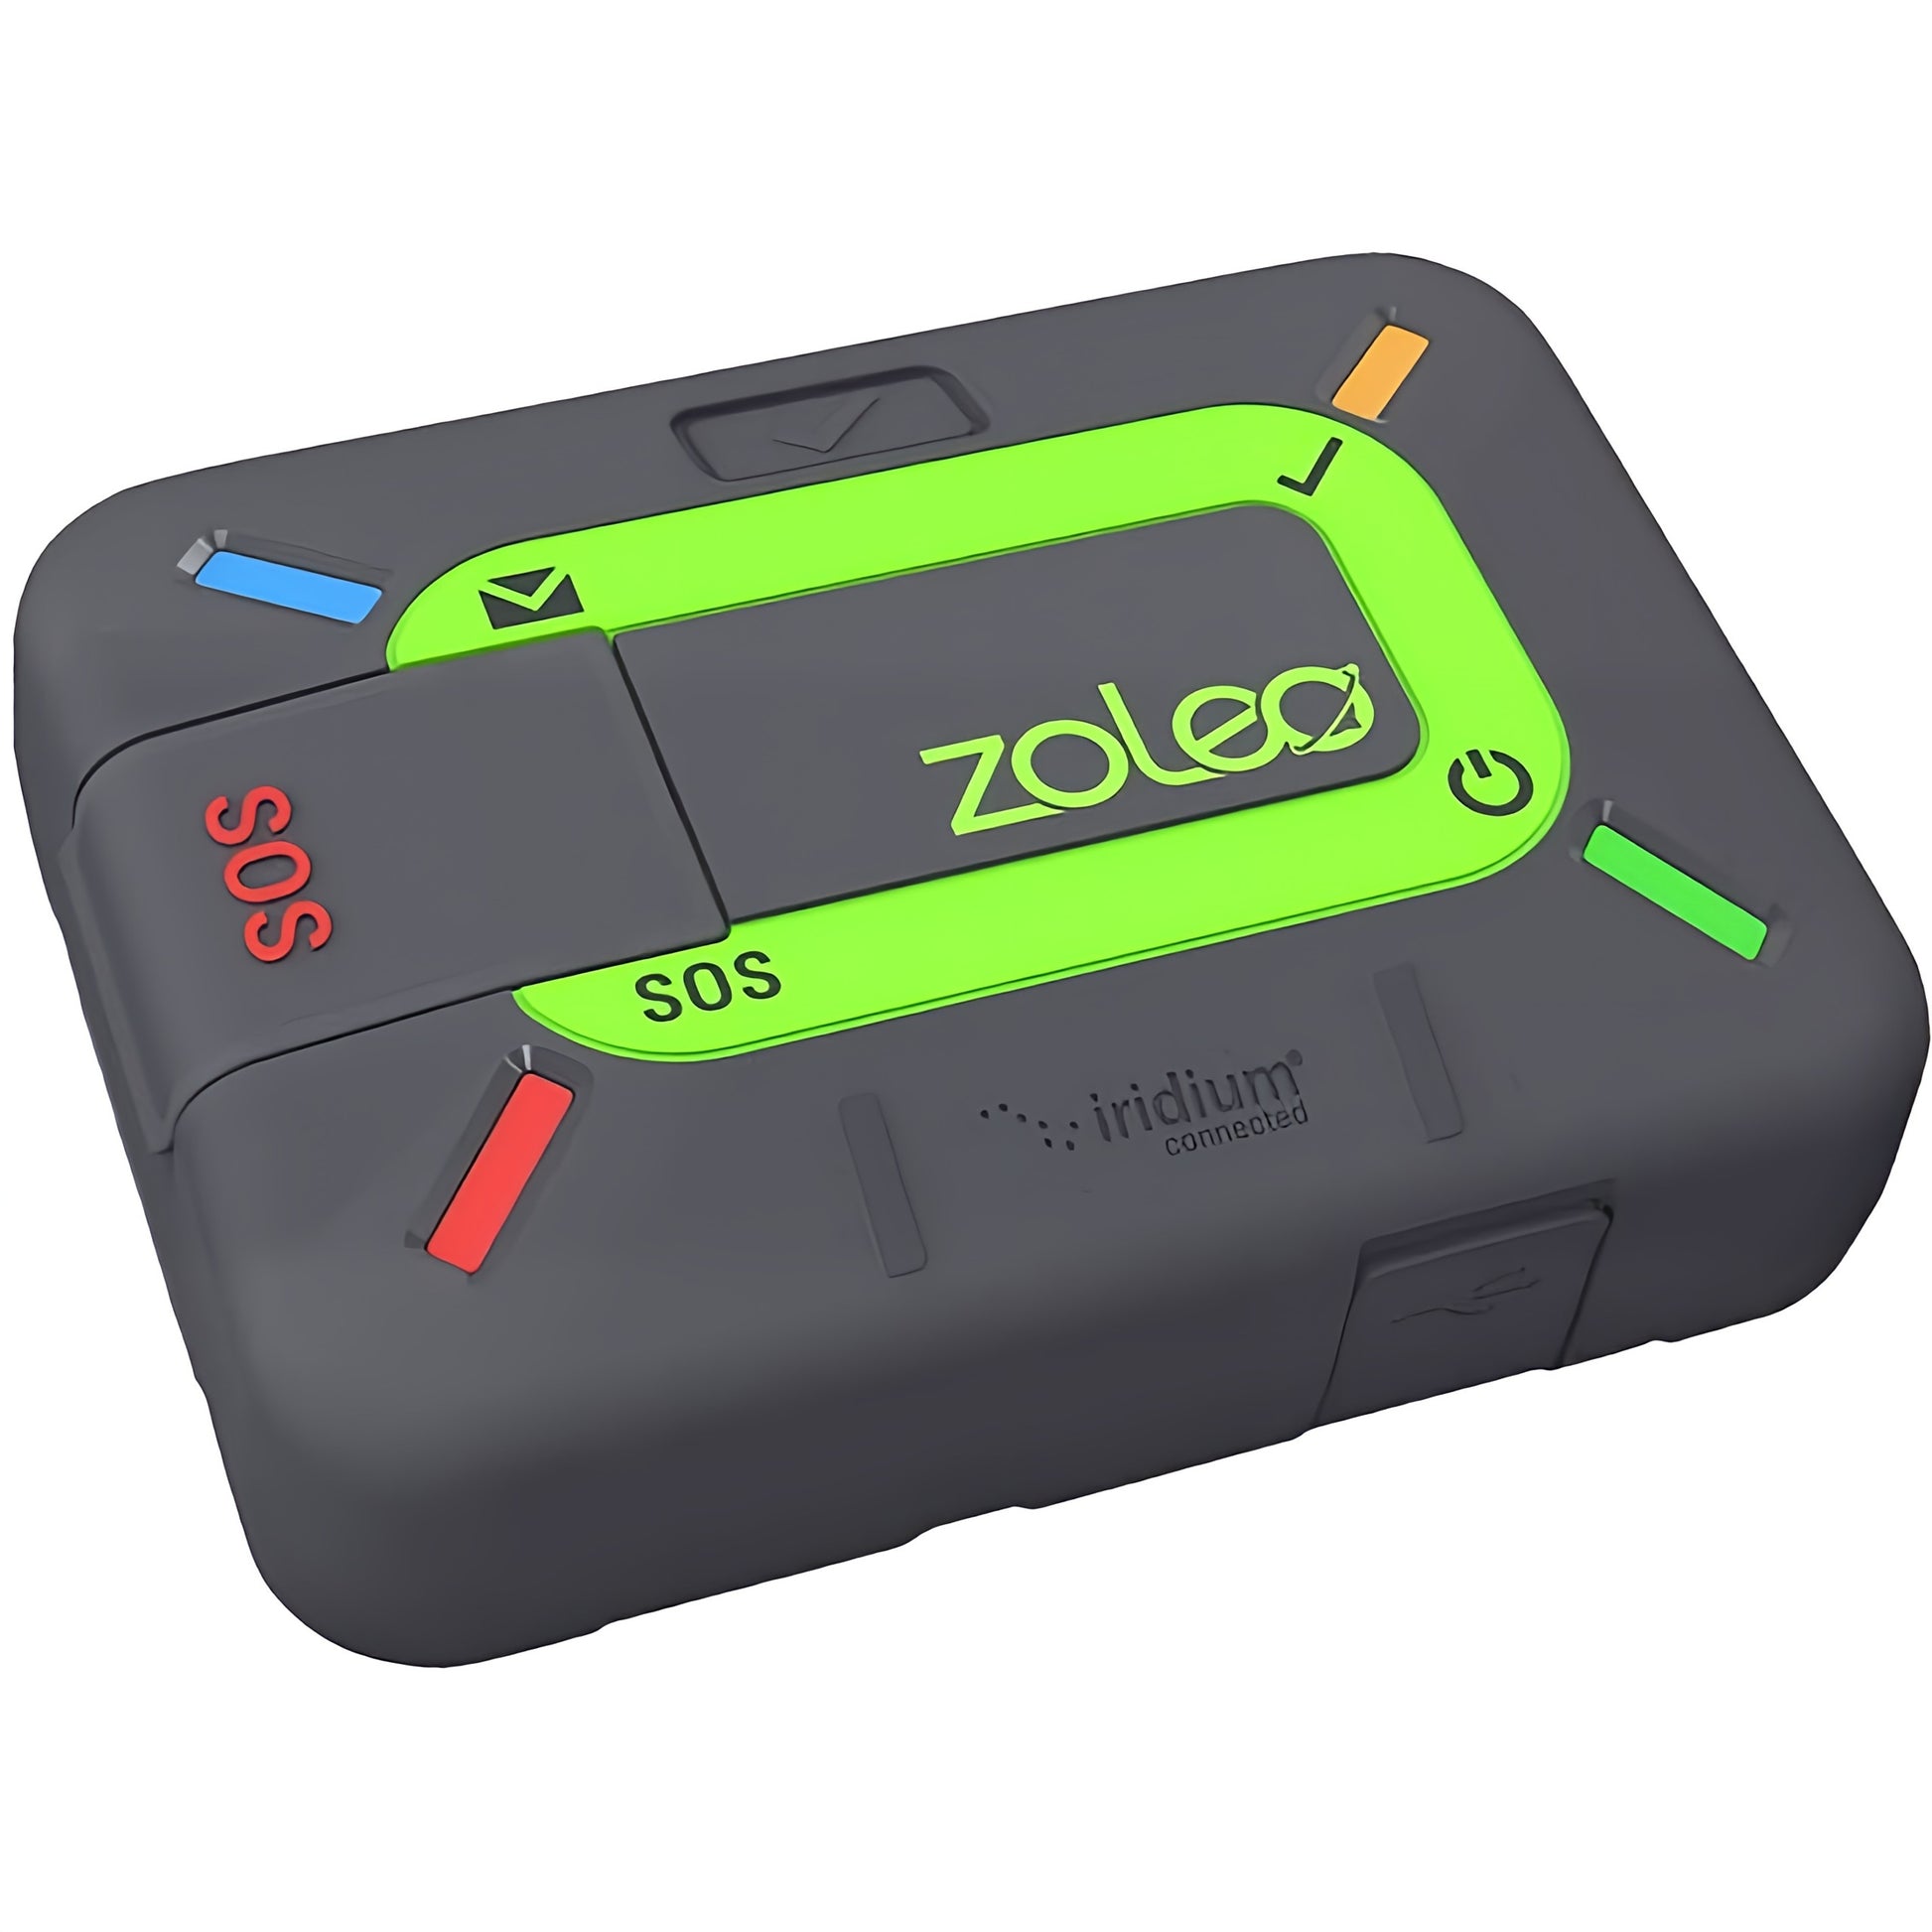 Zoleo Handy Satelliten Kommunikationgerät fürs dein Smartphone Satellitenkommunikator - globale SMS, E-Mail, Apps, SOS im Notfall